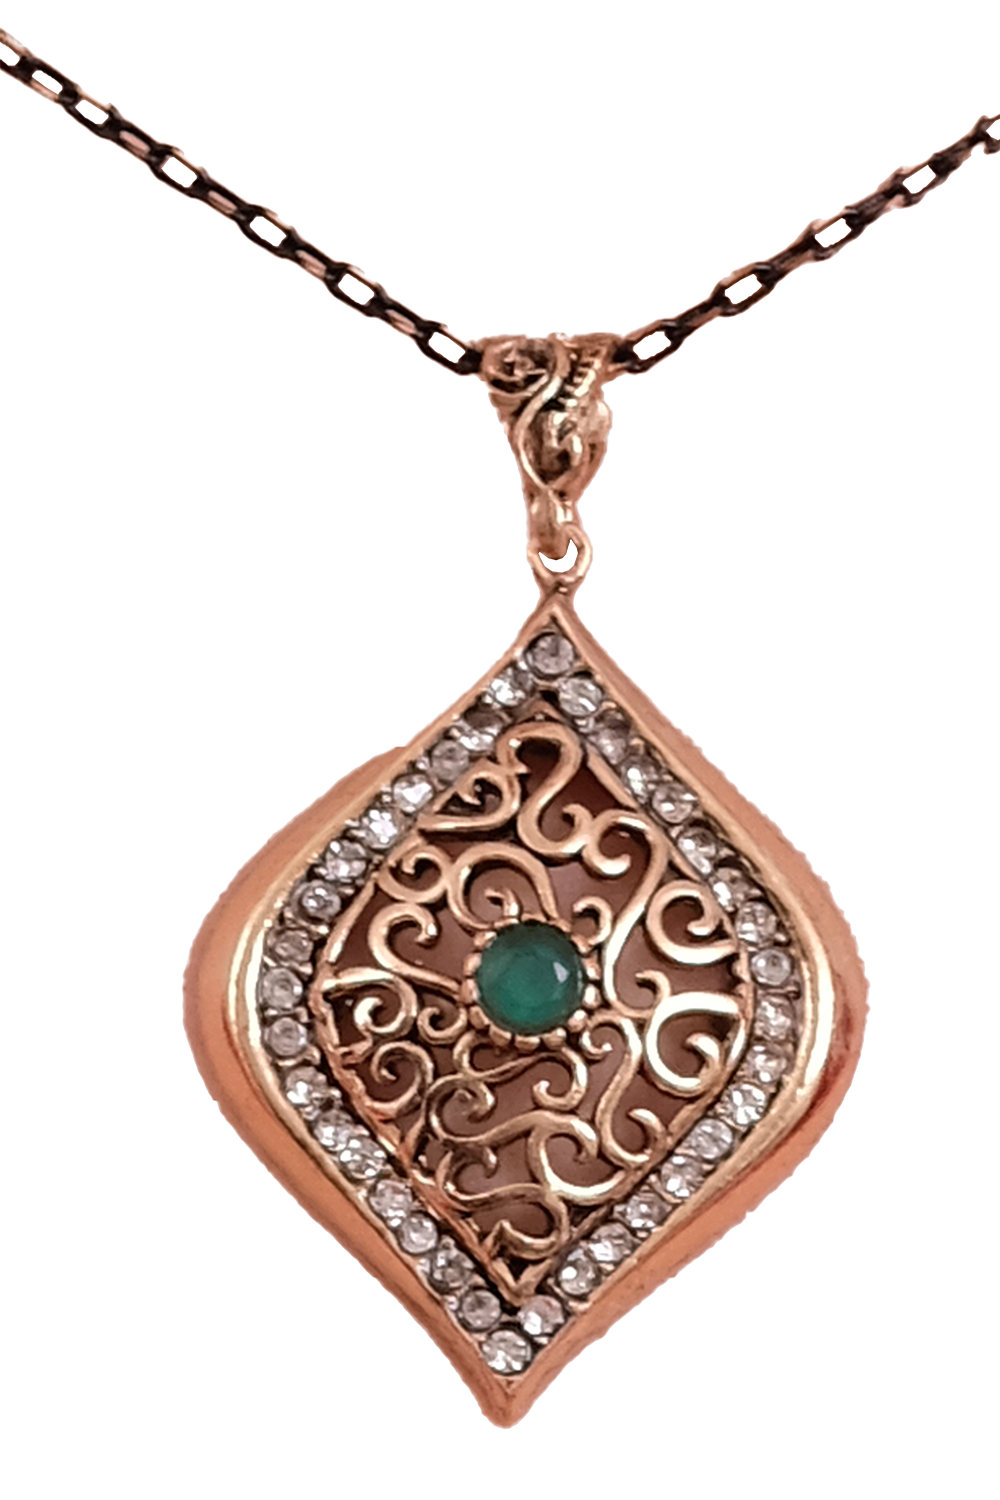 JEWEL OF GARDEN Necklace-Vintage